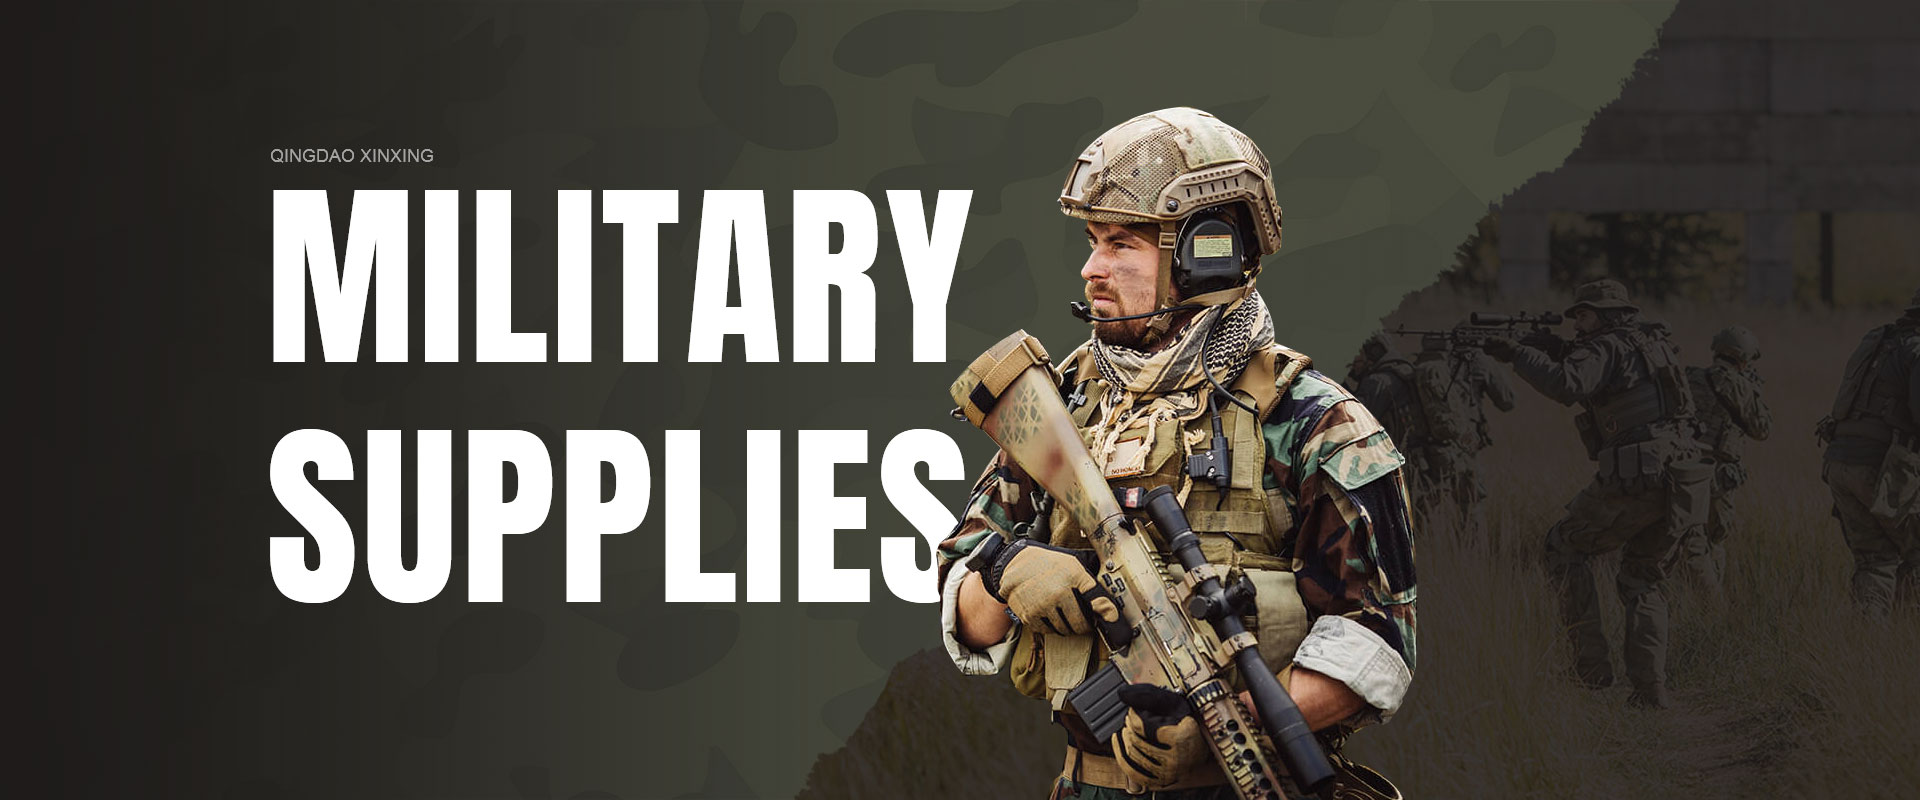 Military supplies